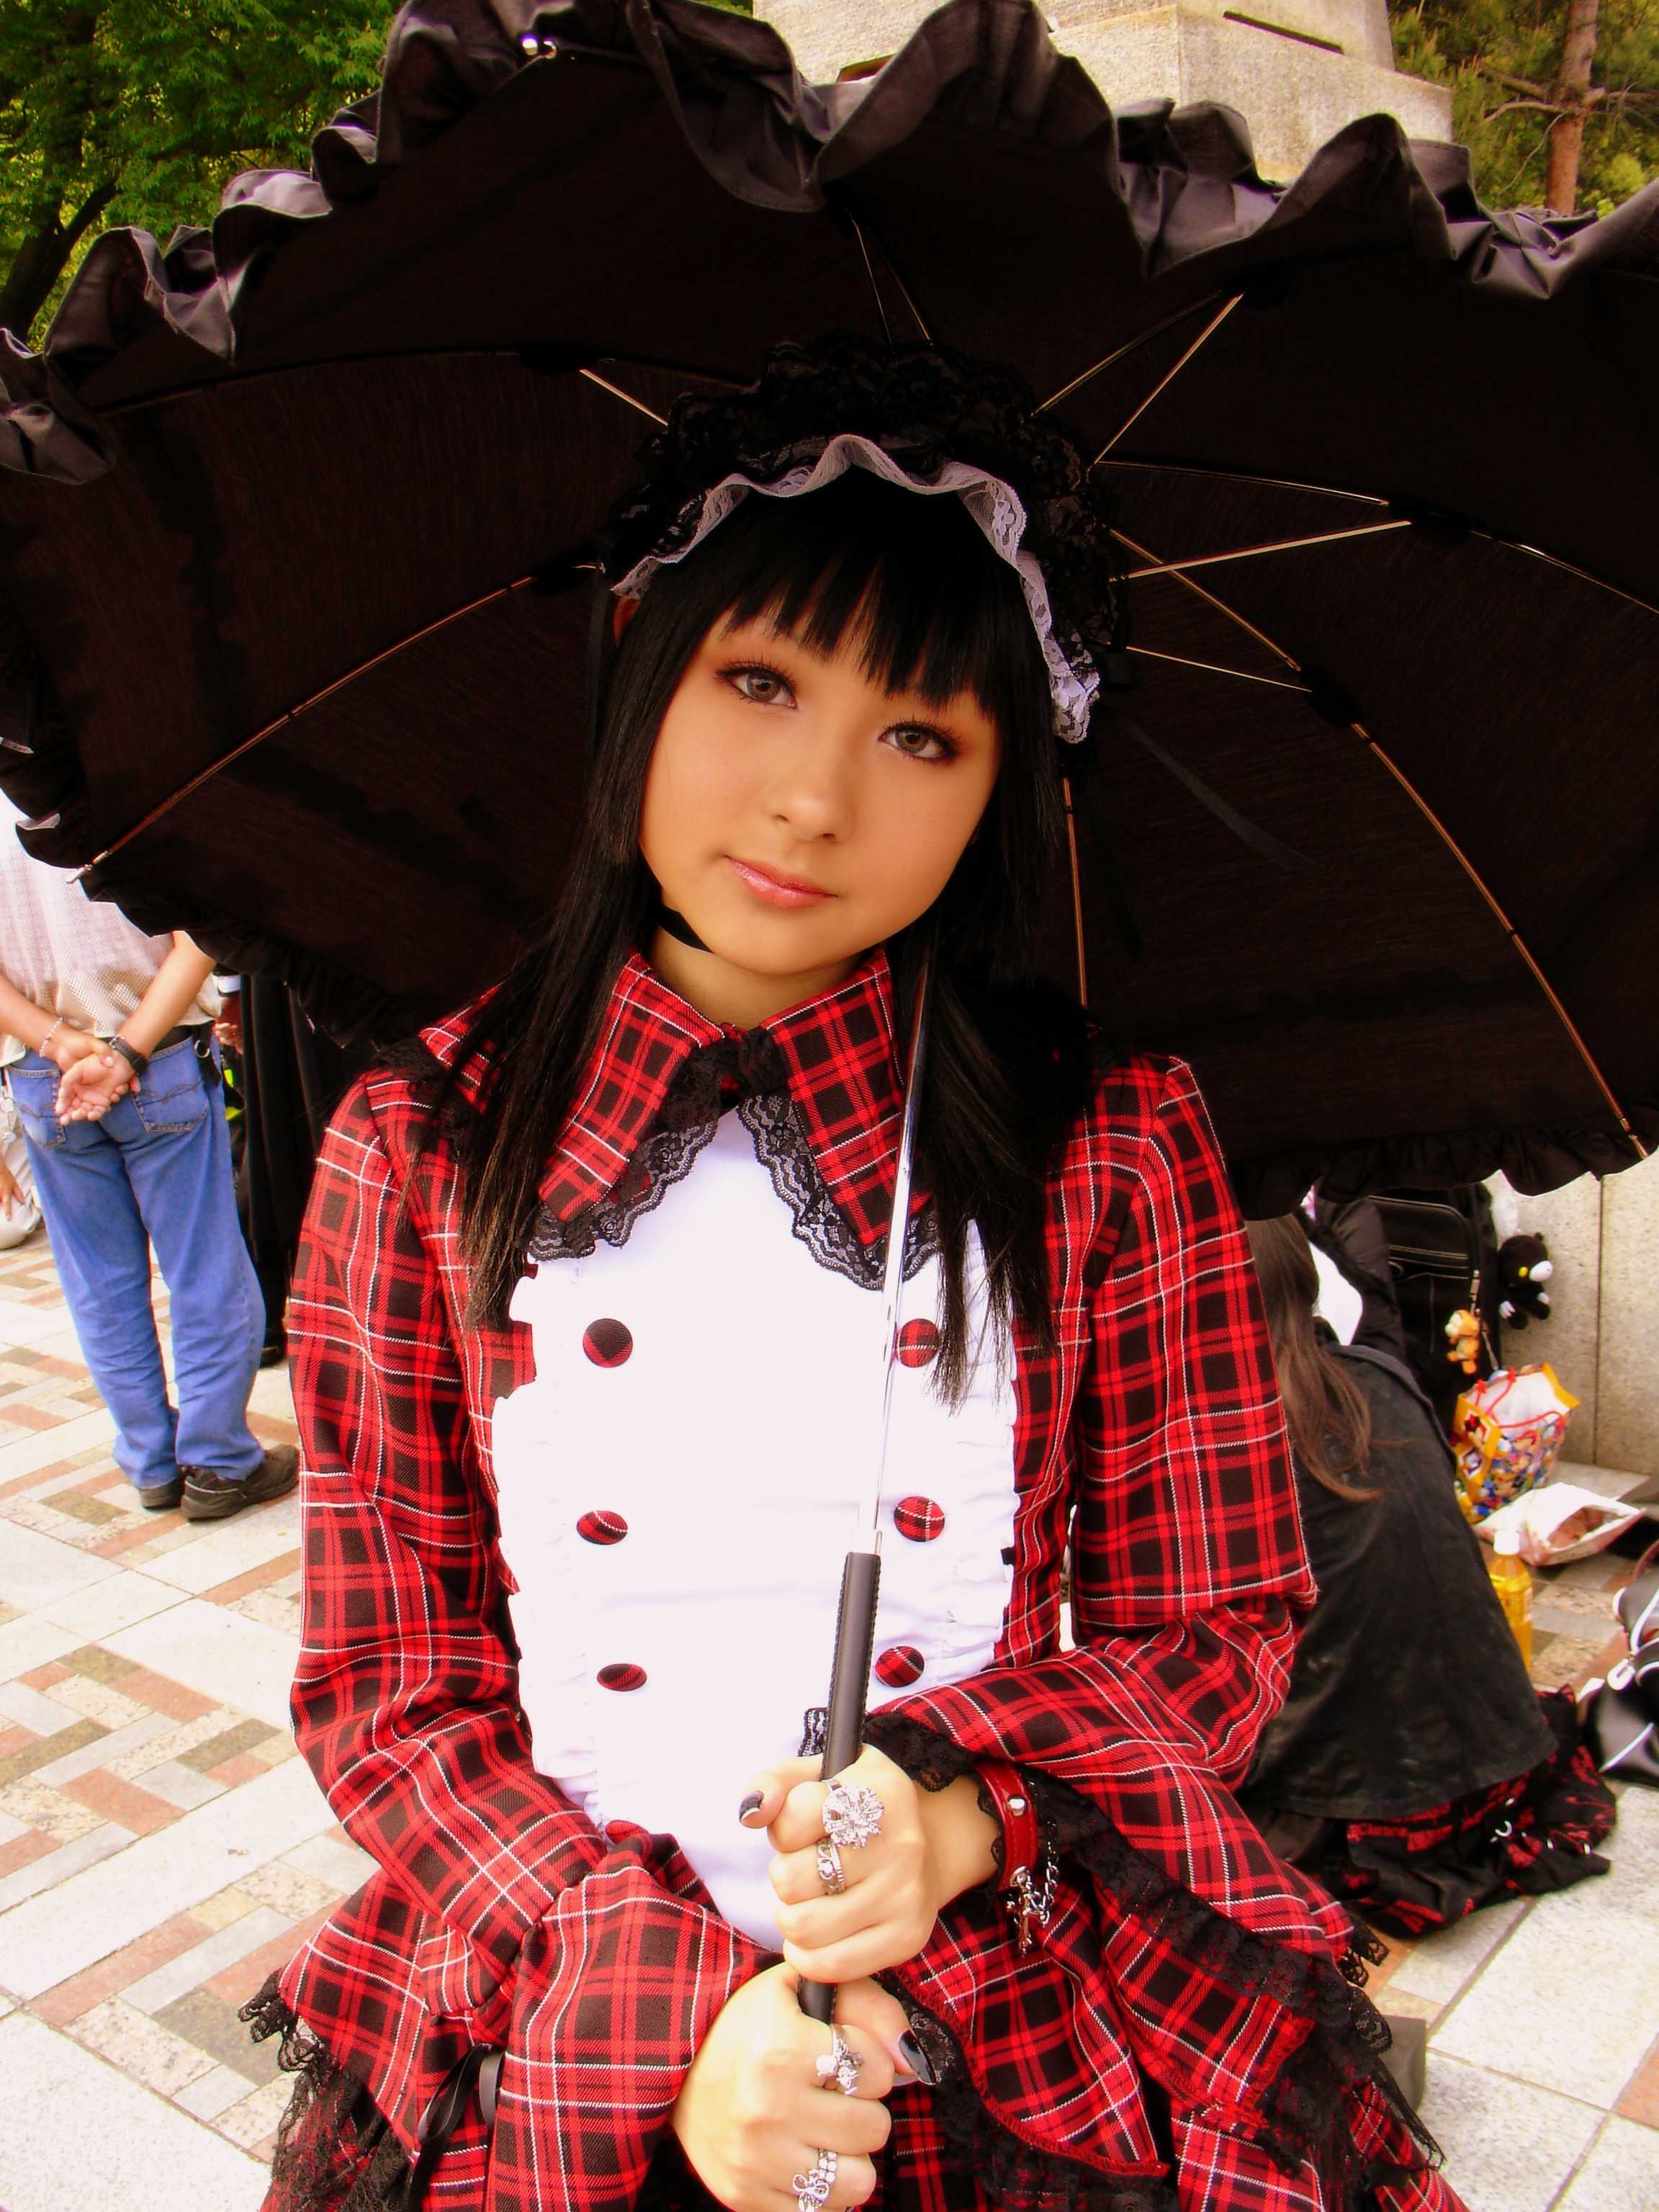 A girl with a lolita fashion